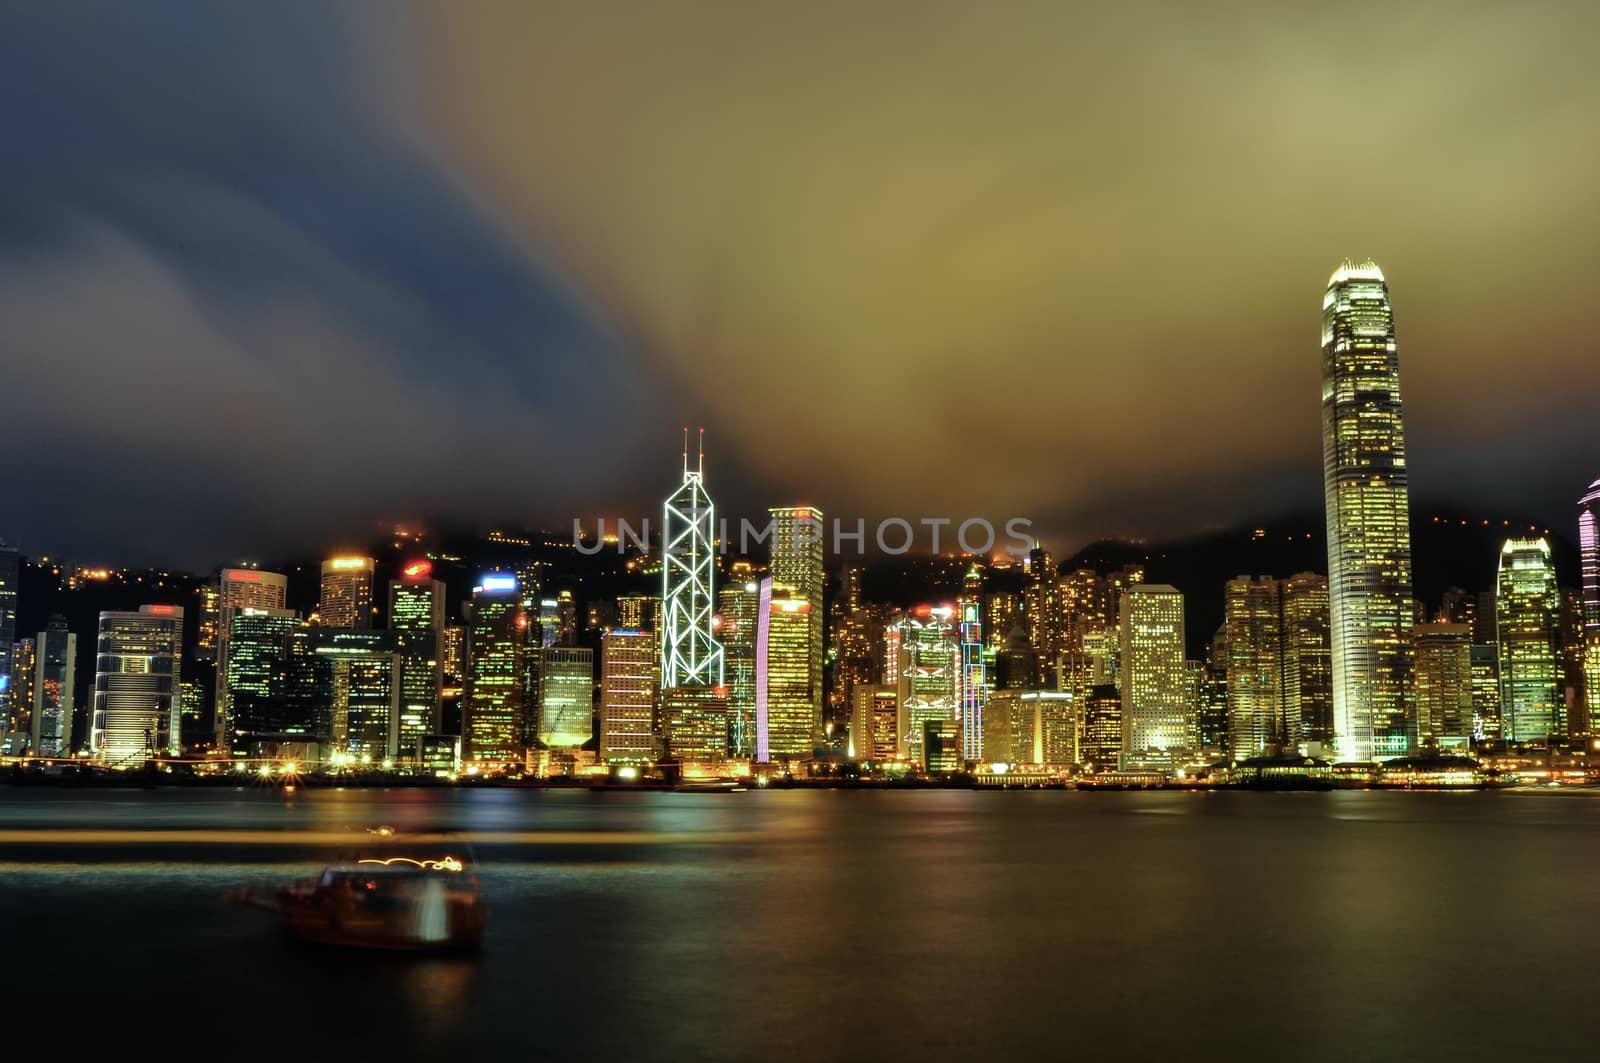 Hong Kong Island ferry by weltreisendertj